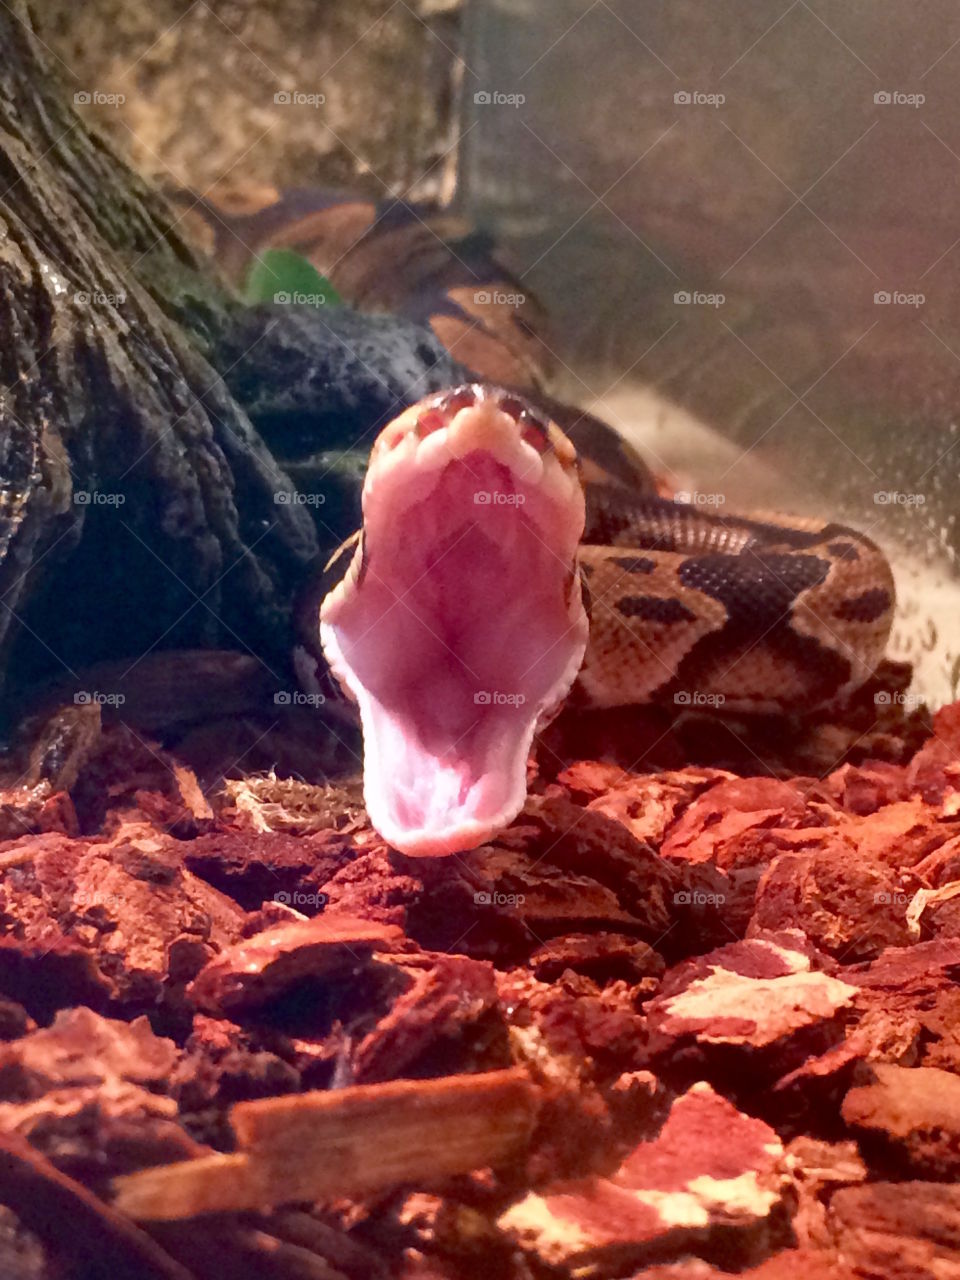 Ball python yawn 